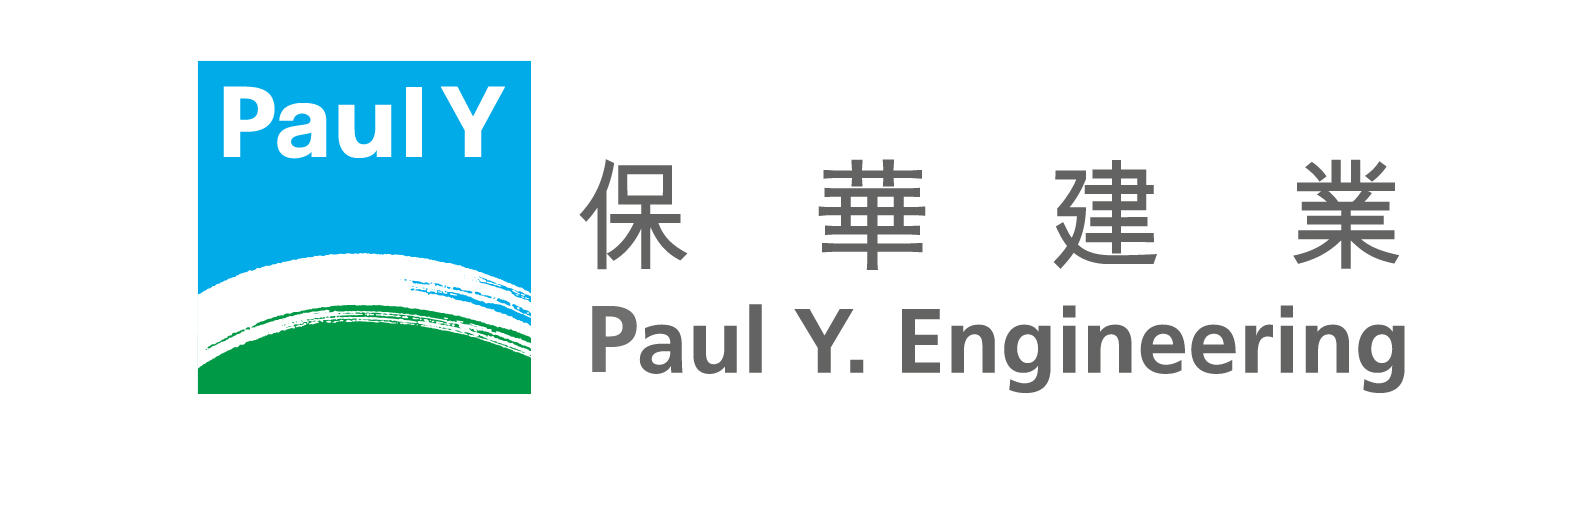 Paul Y. Engineering Group Limited